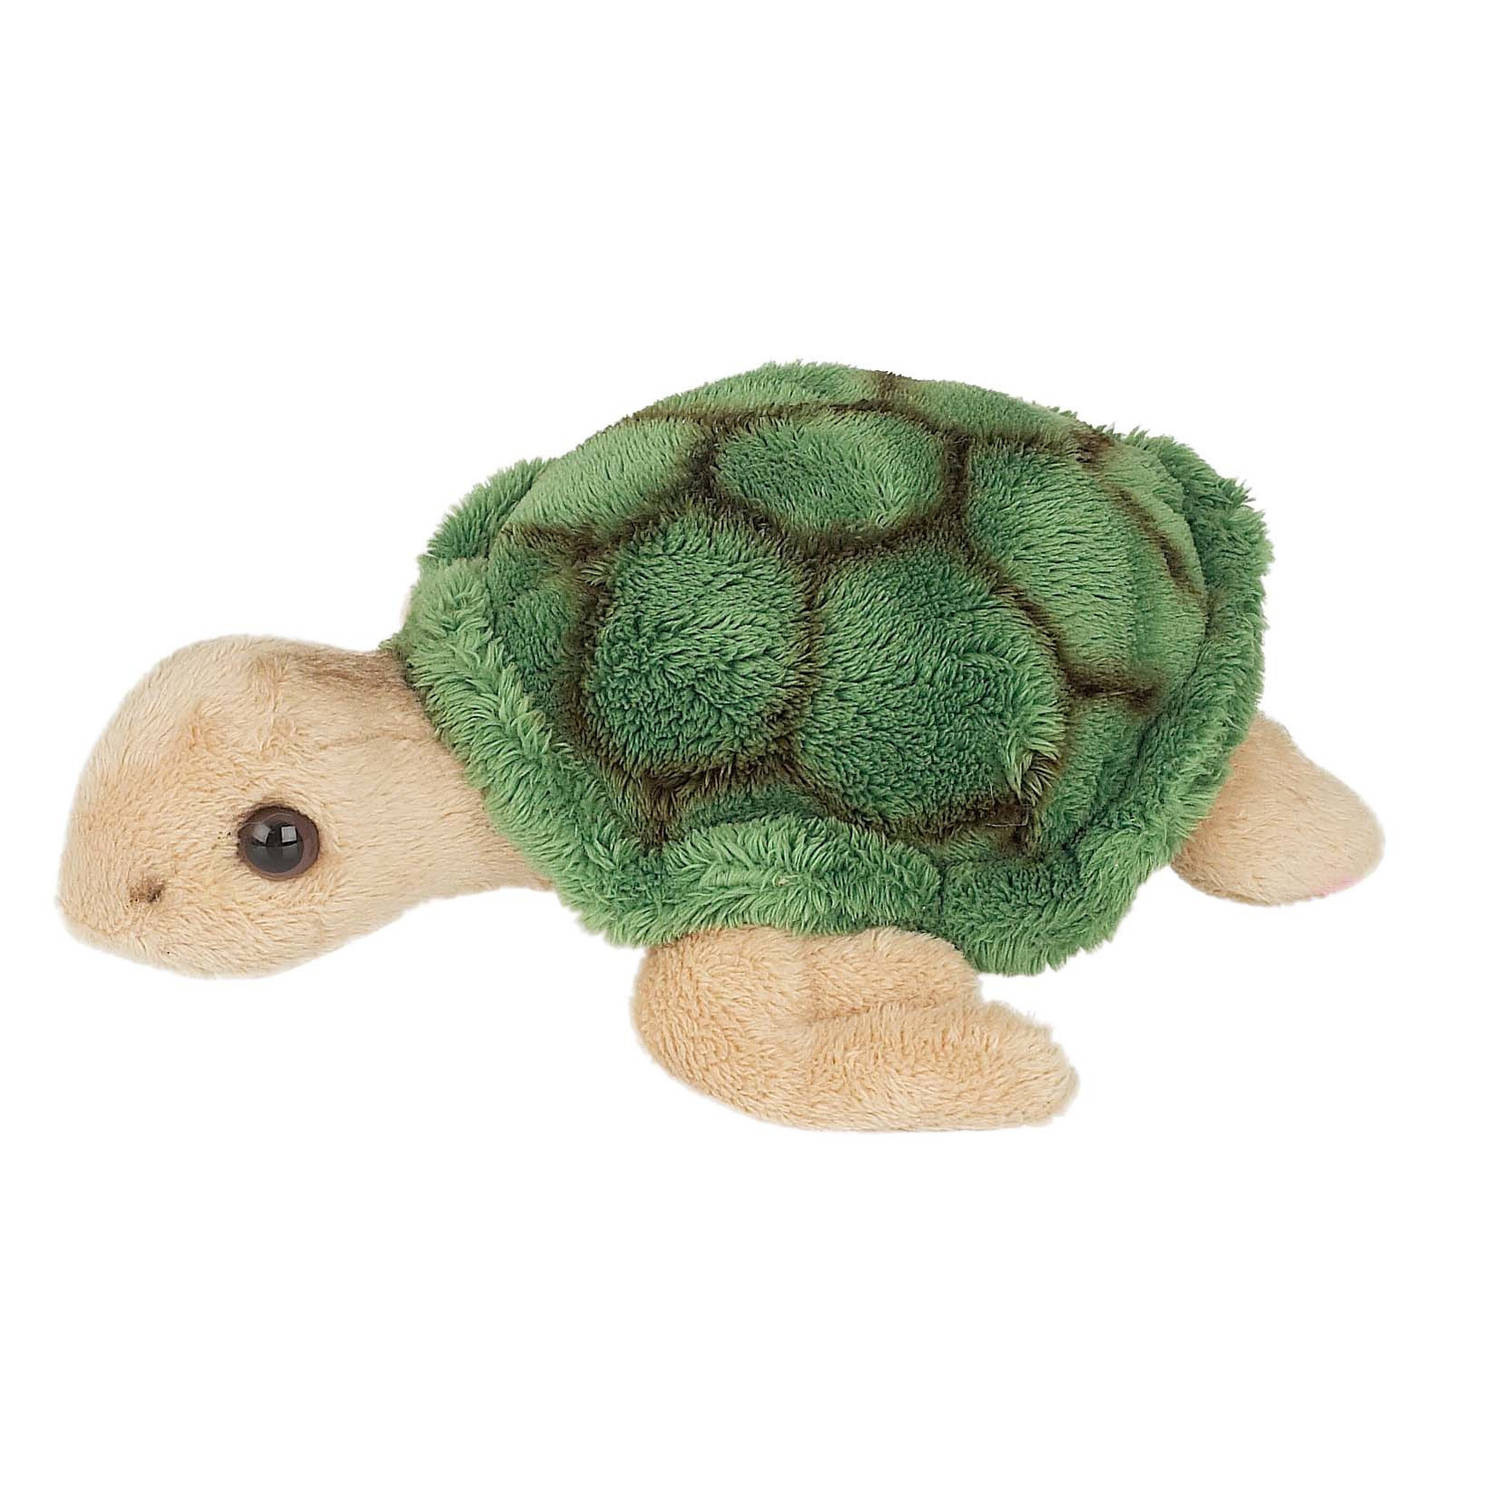 Pluche kleine knuffel dieren Zeeschildpad van 15 cm - Speelgoed knuffels zeedieren - Leuk als cadeau